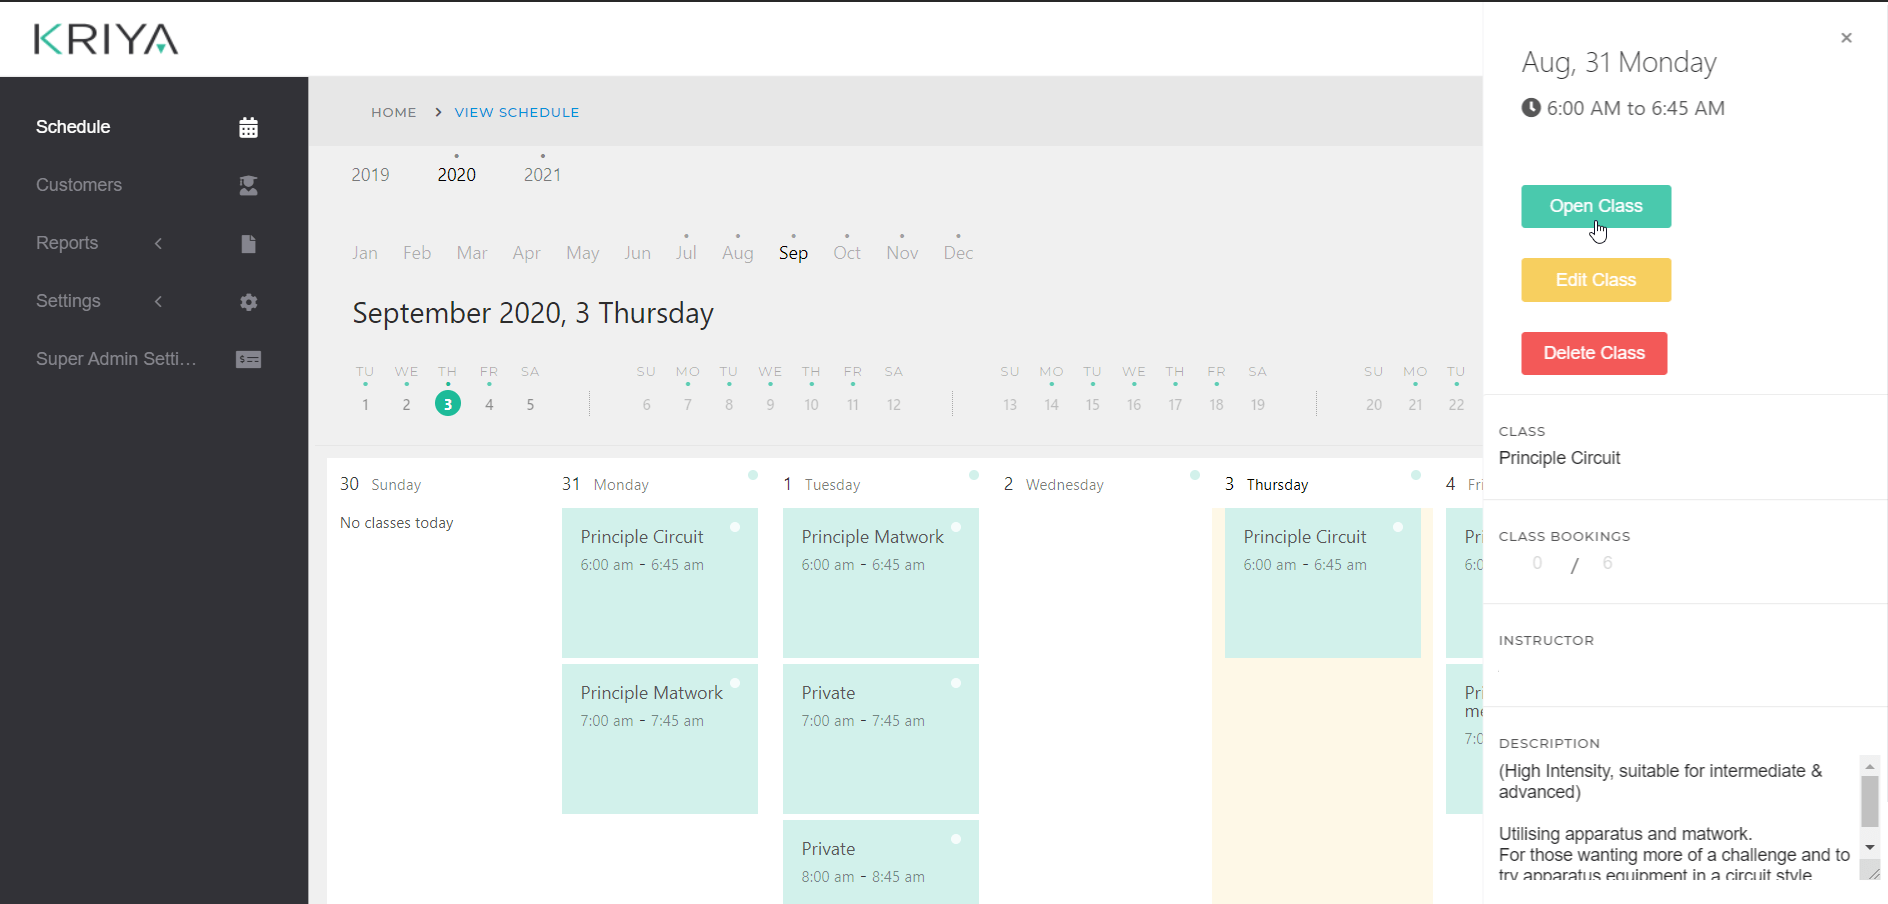 Pilates Classes Schedule - KRIYA Software